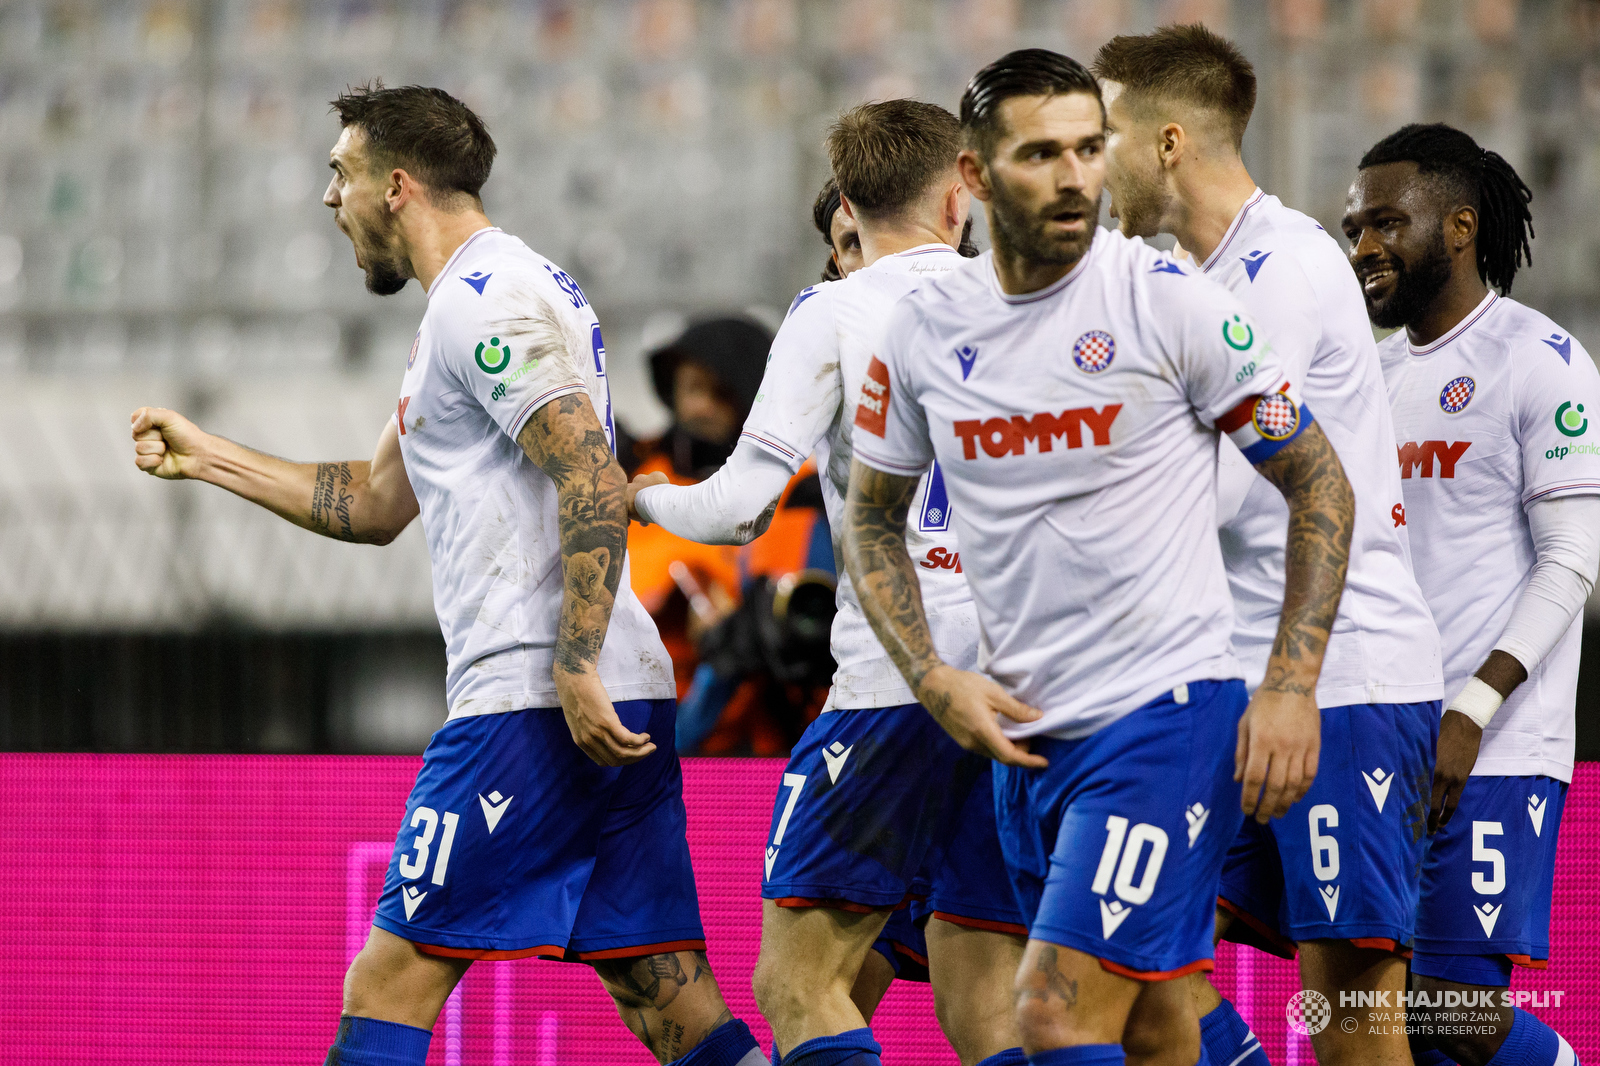 Hajduk - Varaždin 3:1